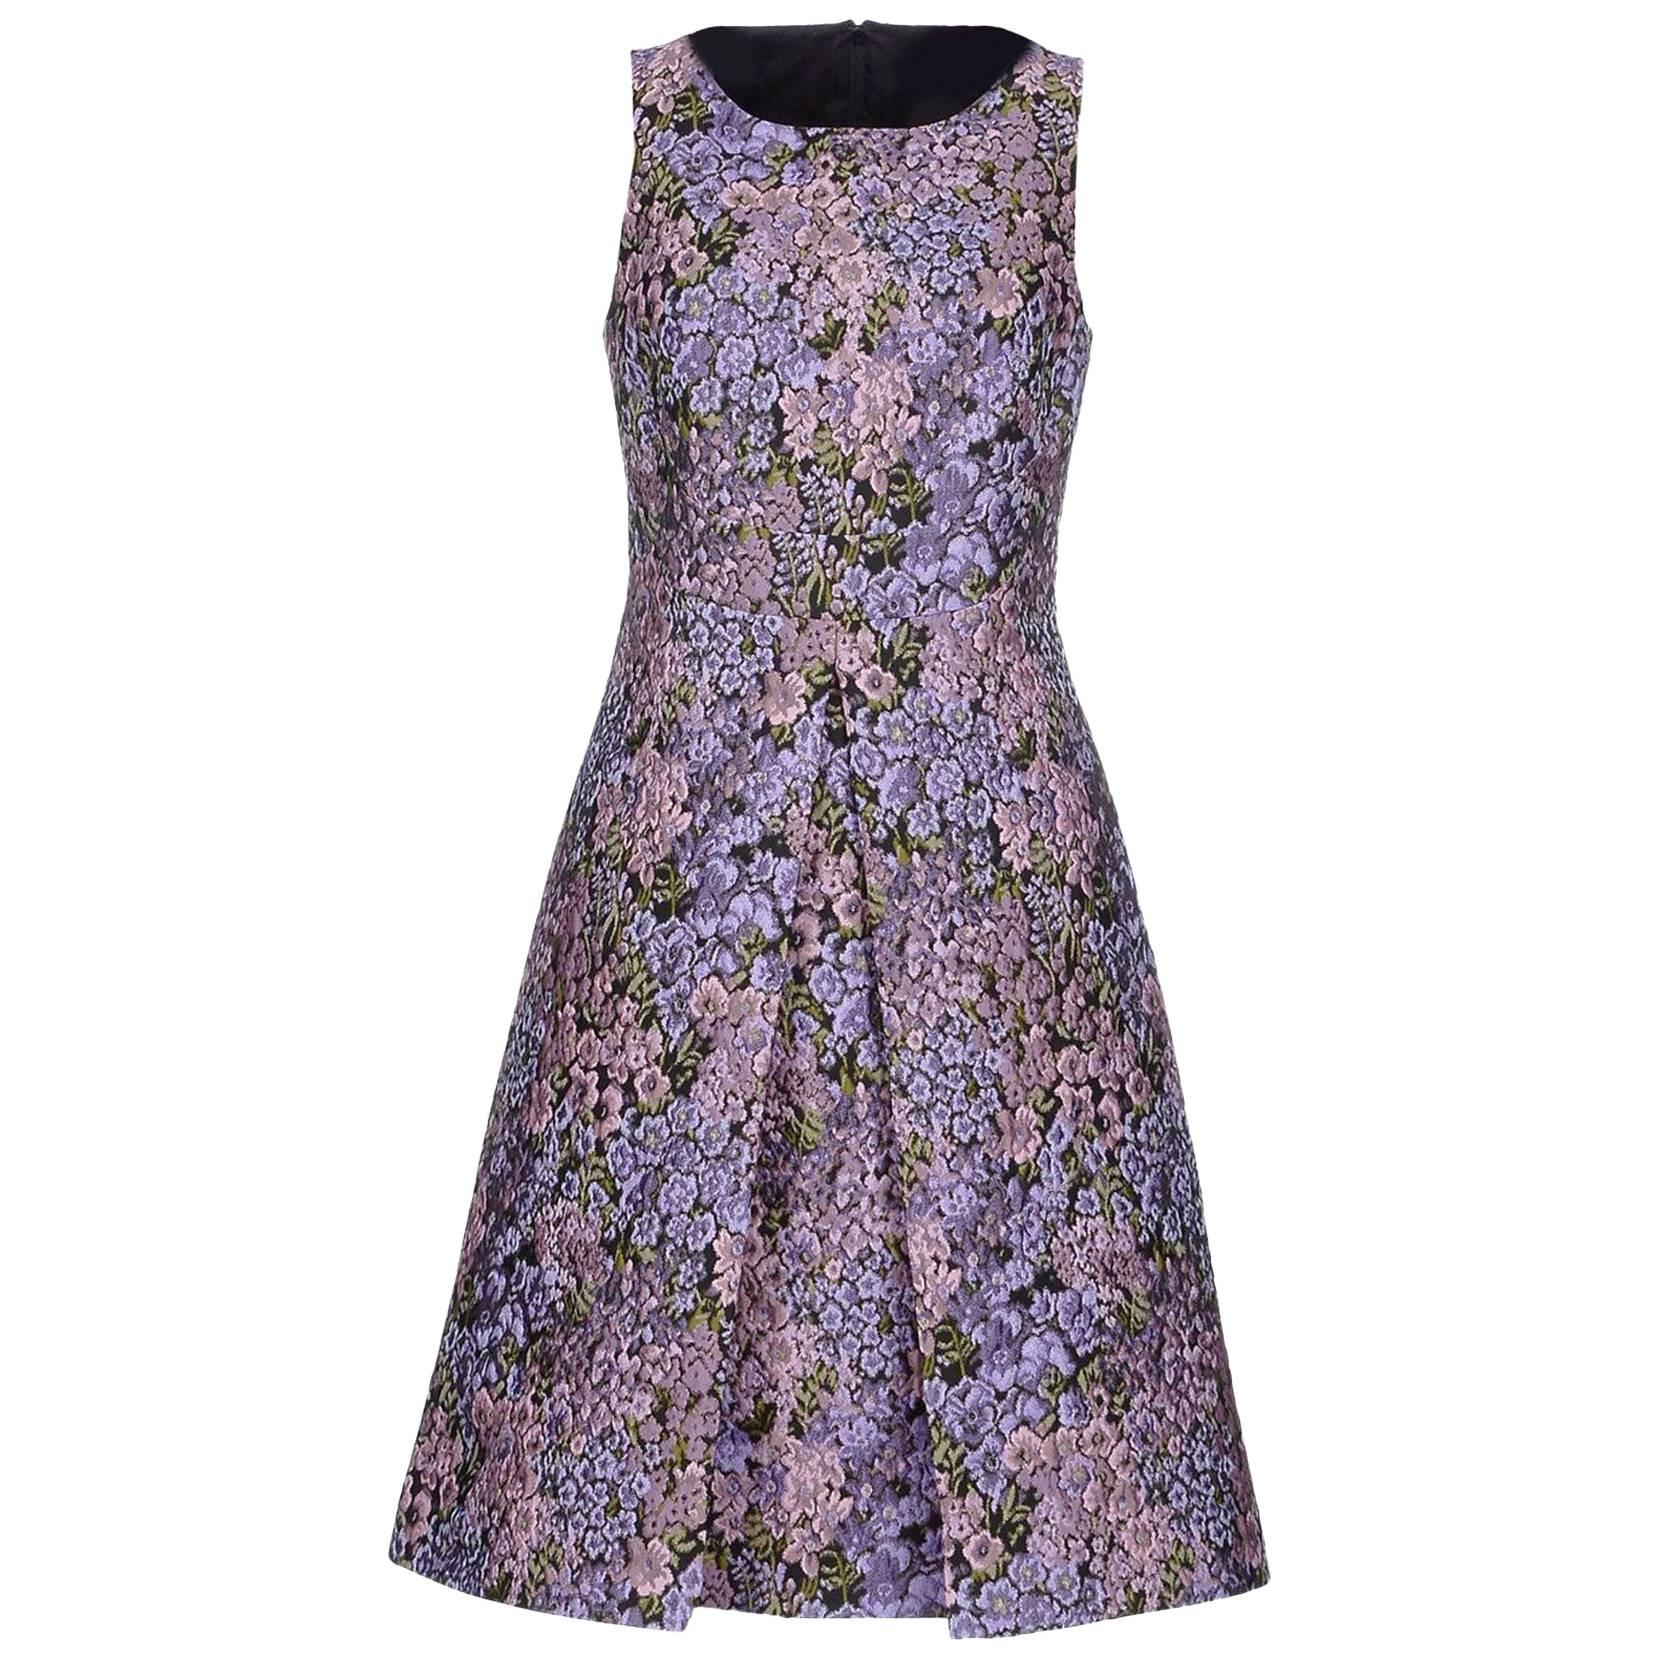 New MICHAEL KORS Jacquard Lilac Floral Design Dress size 12 For Sale